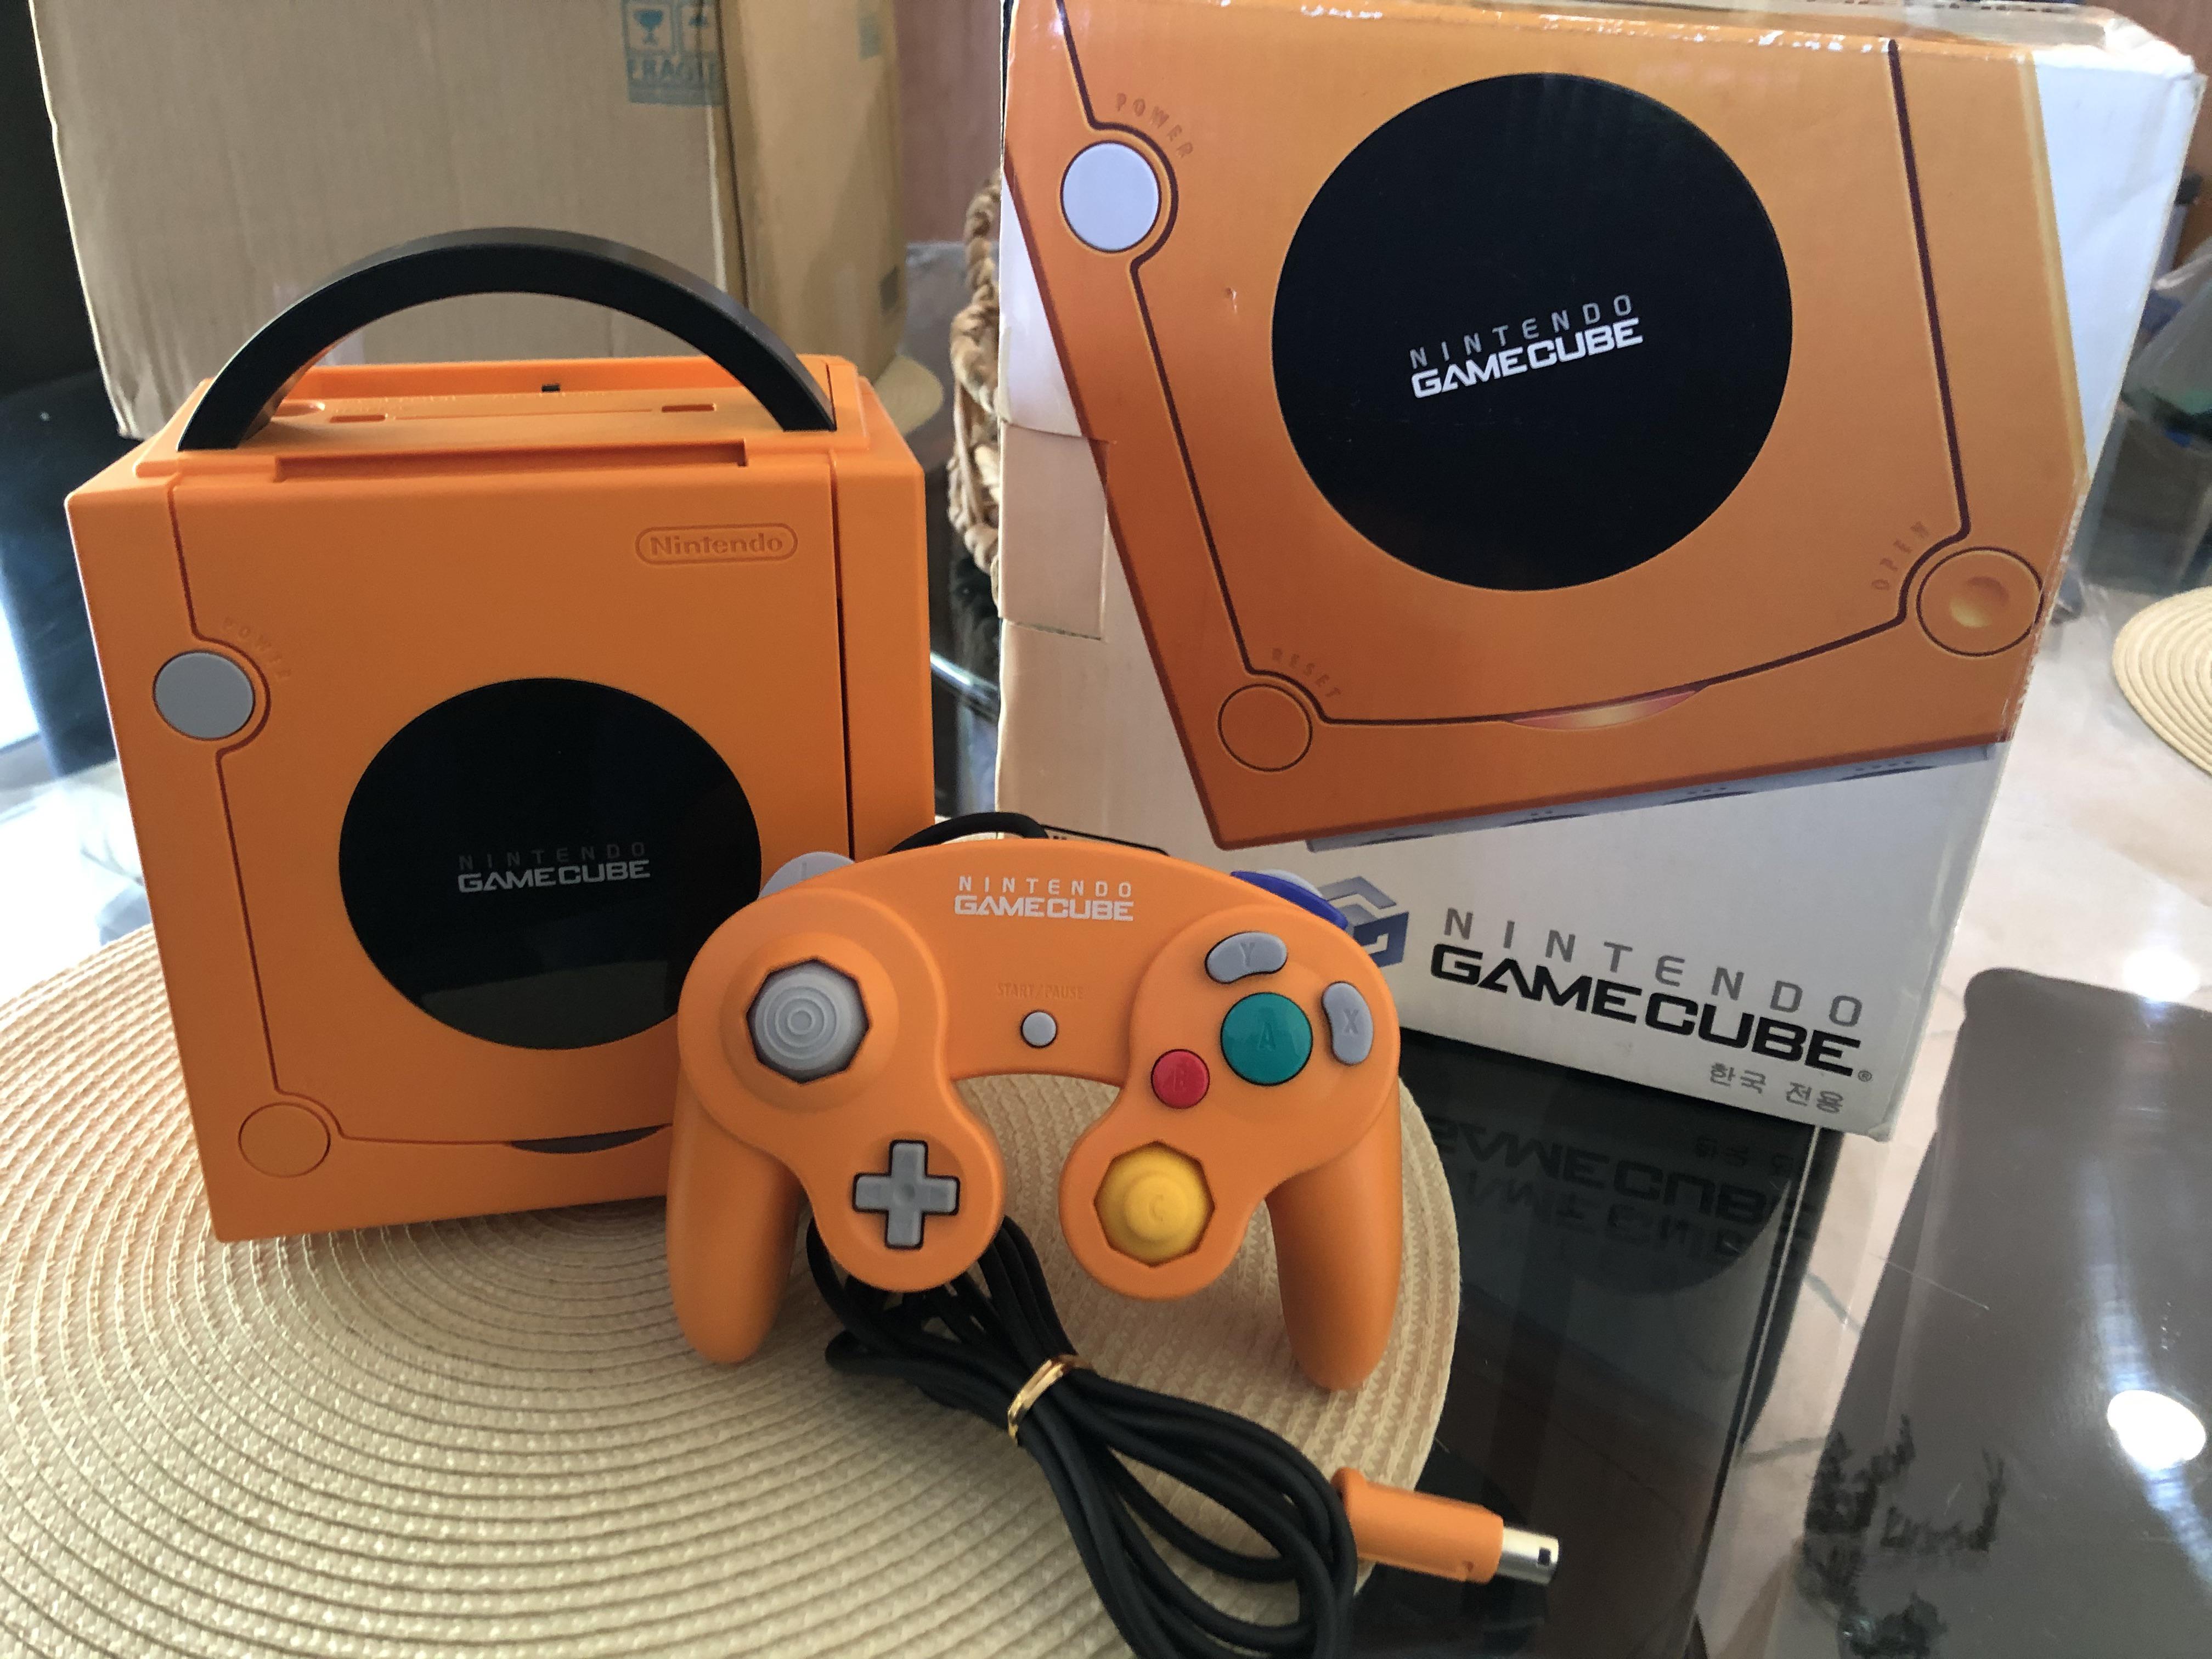  Nintendo GameCube Spice Orange Console [KOR]